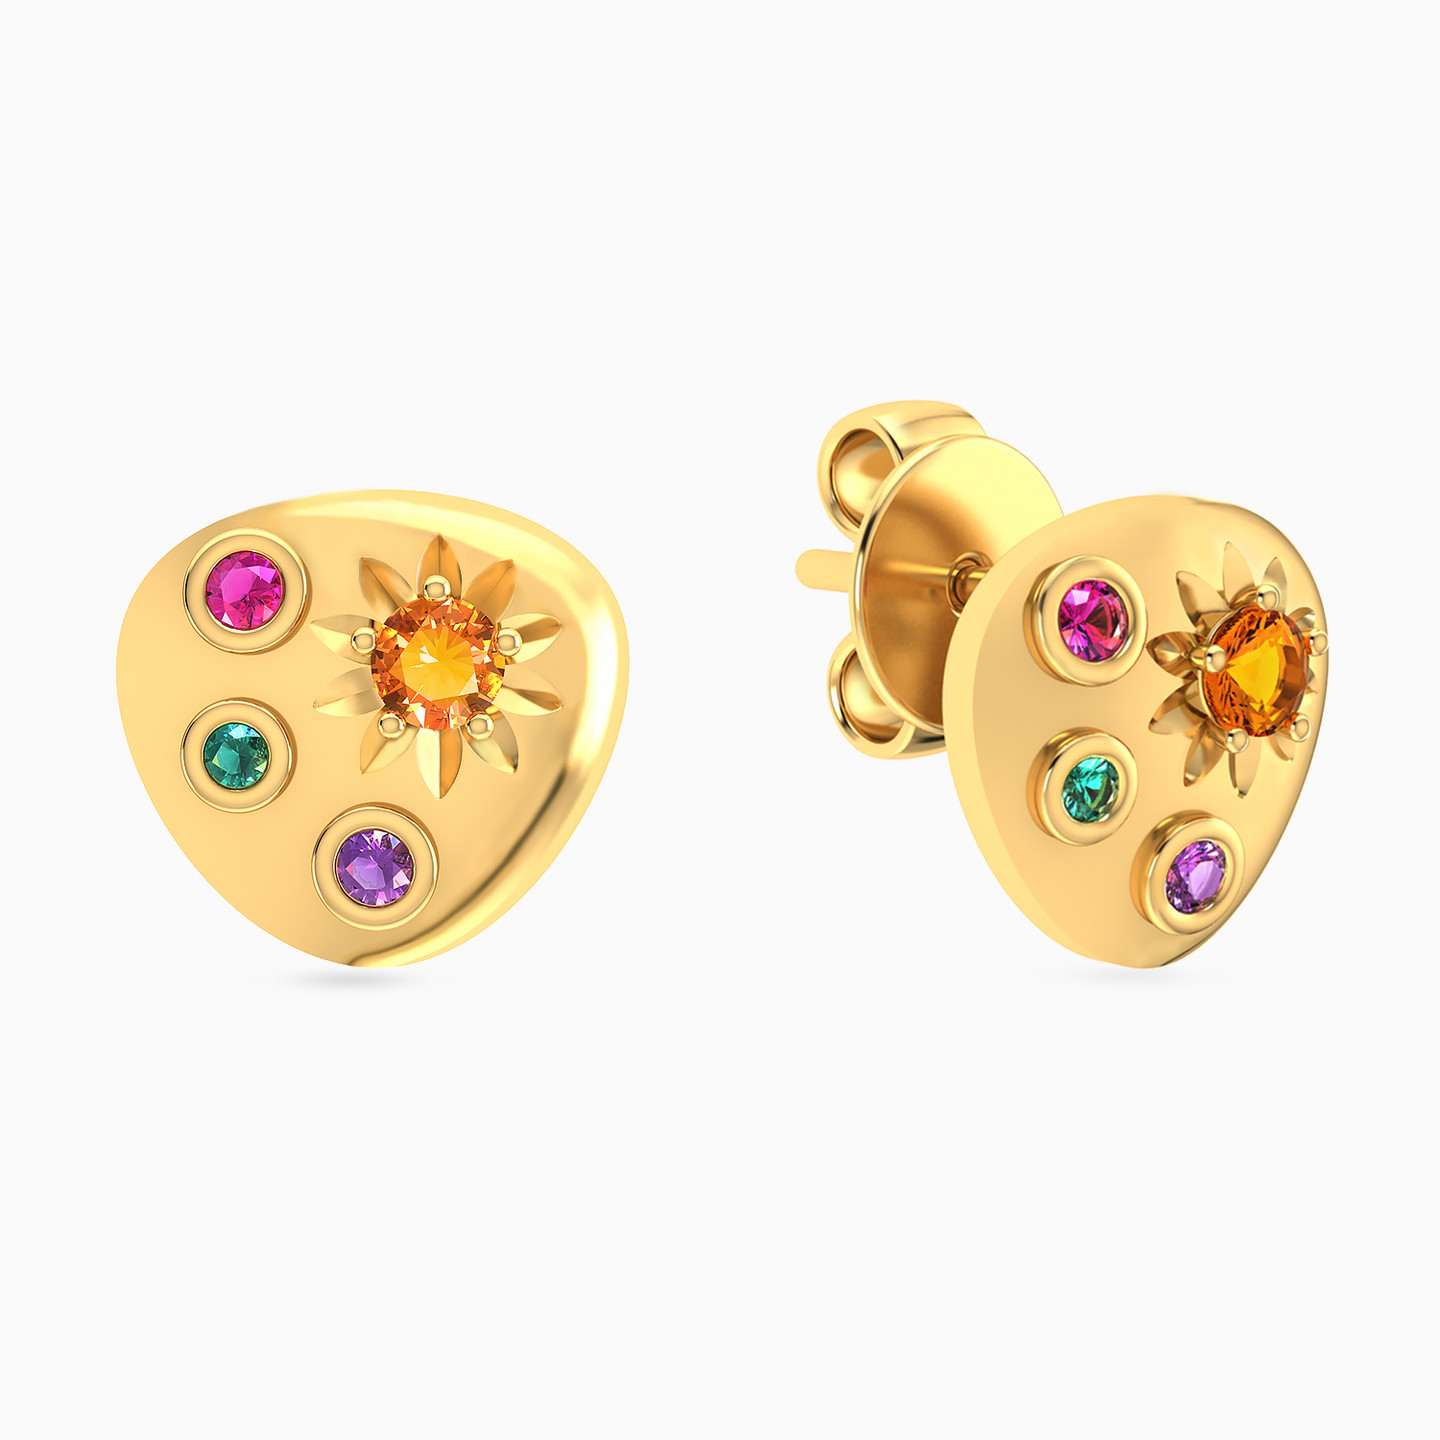 14K Gold Colored Stones Stud Earrings - 2